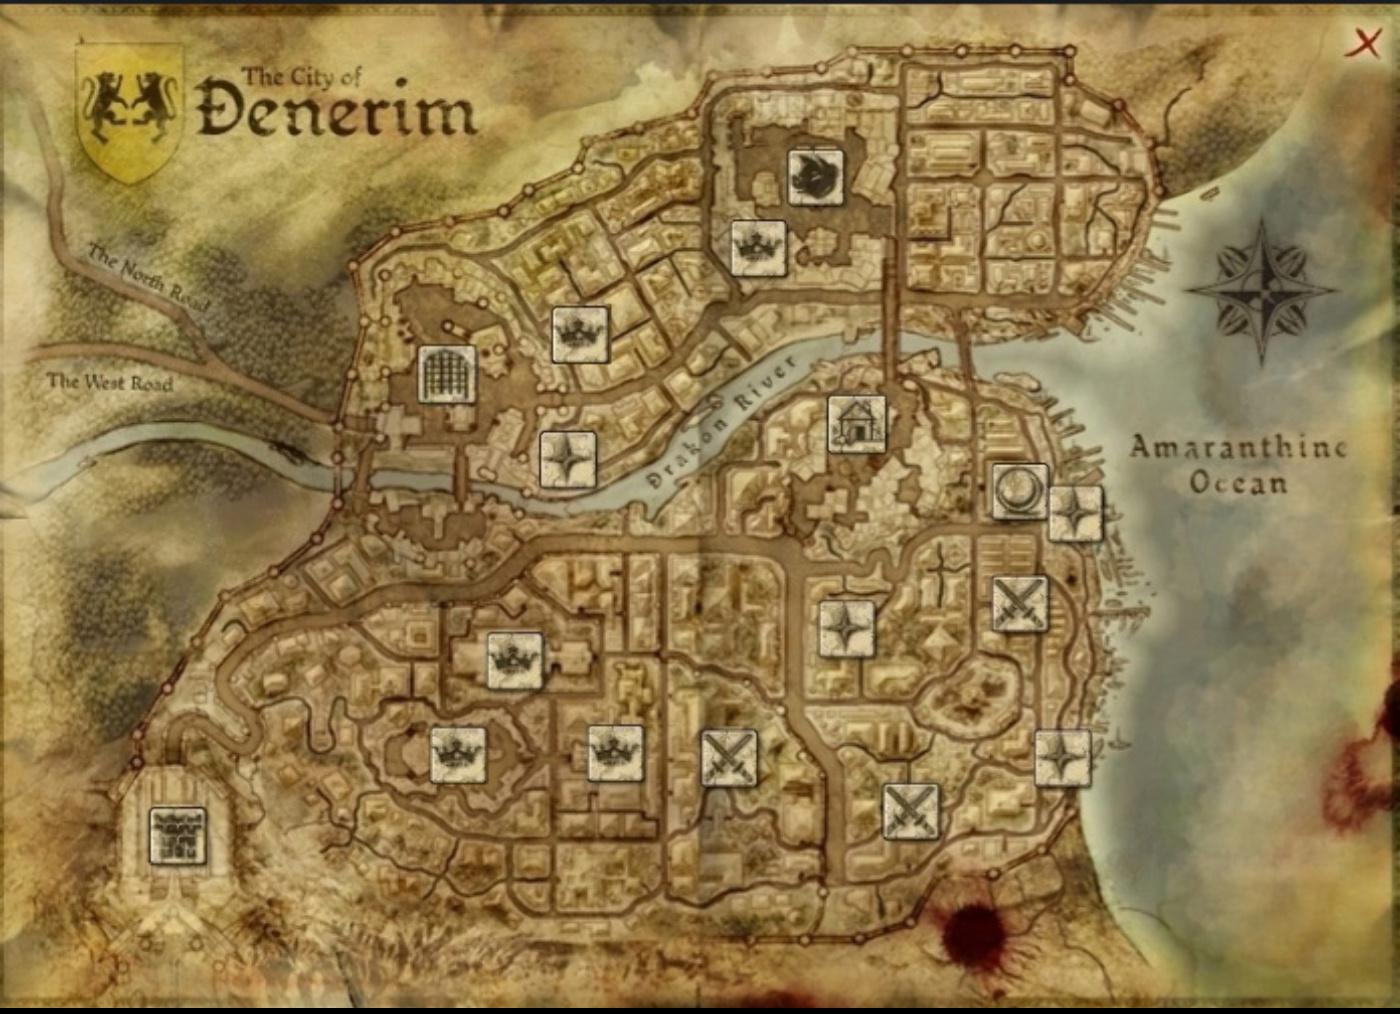 Dragon Age Origins - City Elf origin